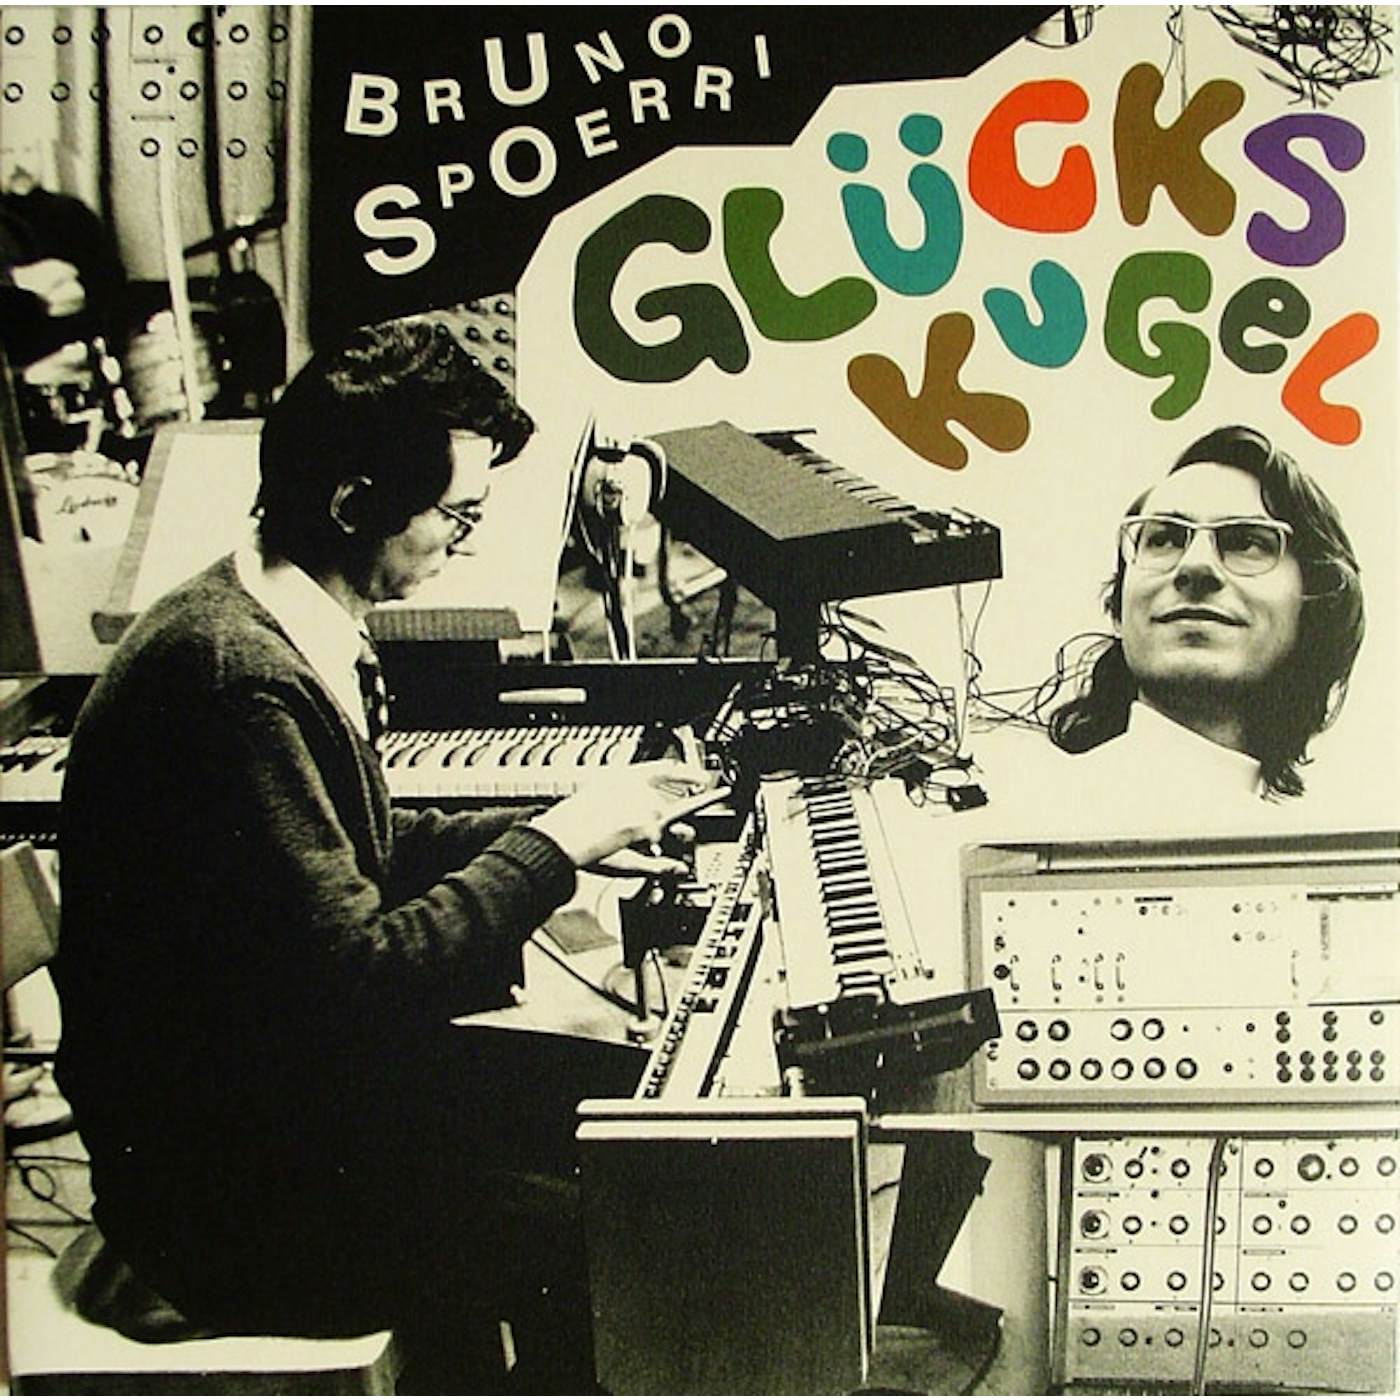 Bruno Spoerri GLUCKSKUGEL Vinyl Record